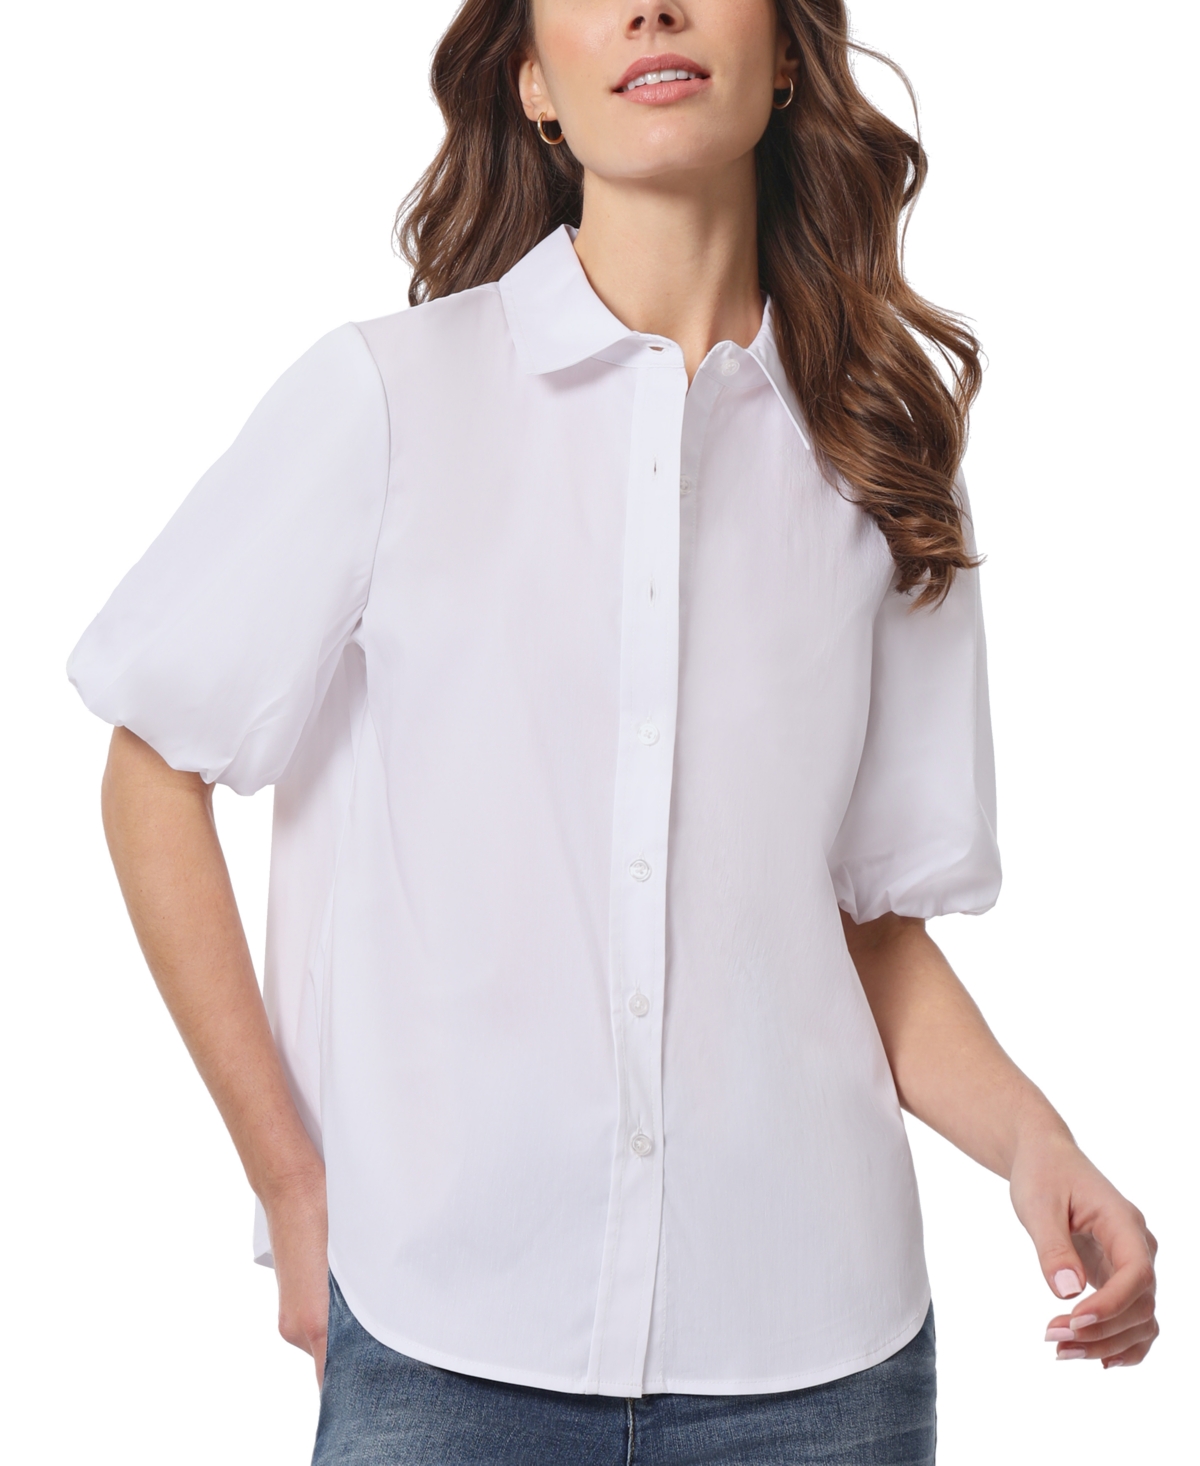 Women's Puffed-Sleeve Blouse - NYC White